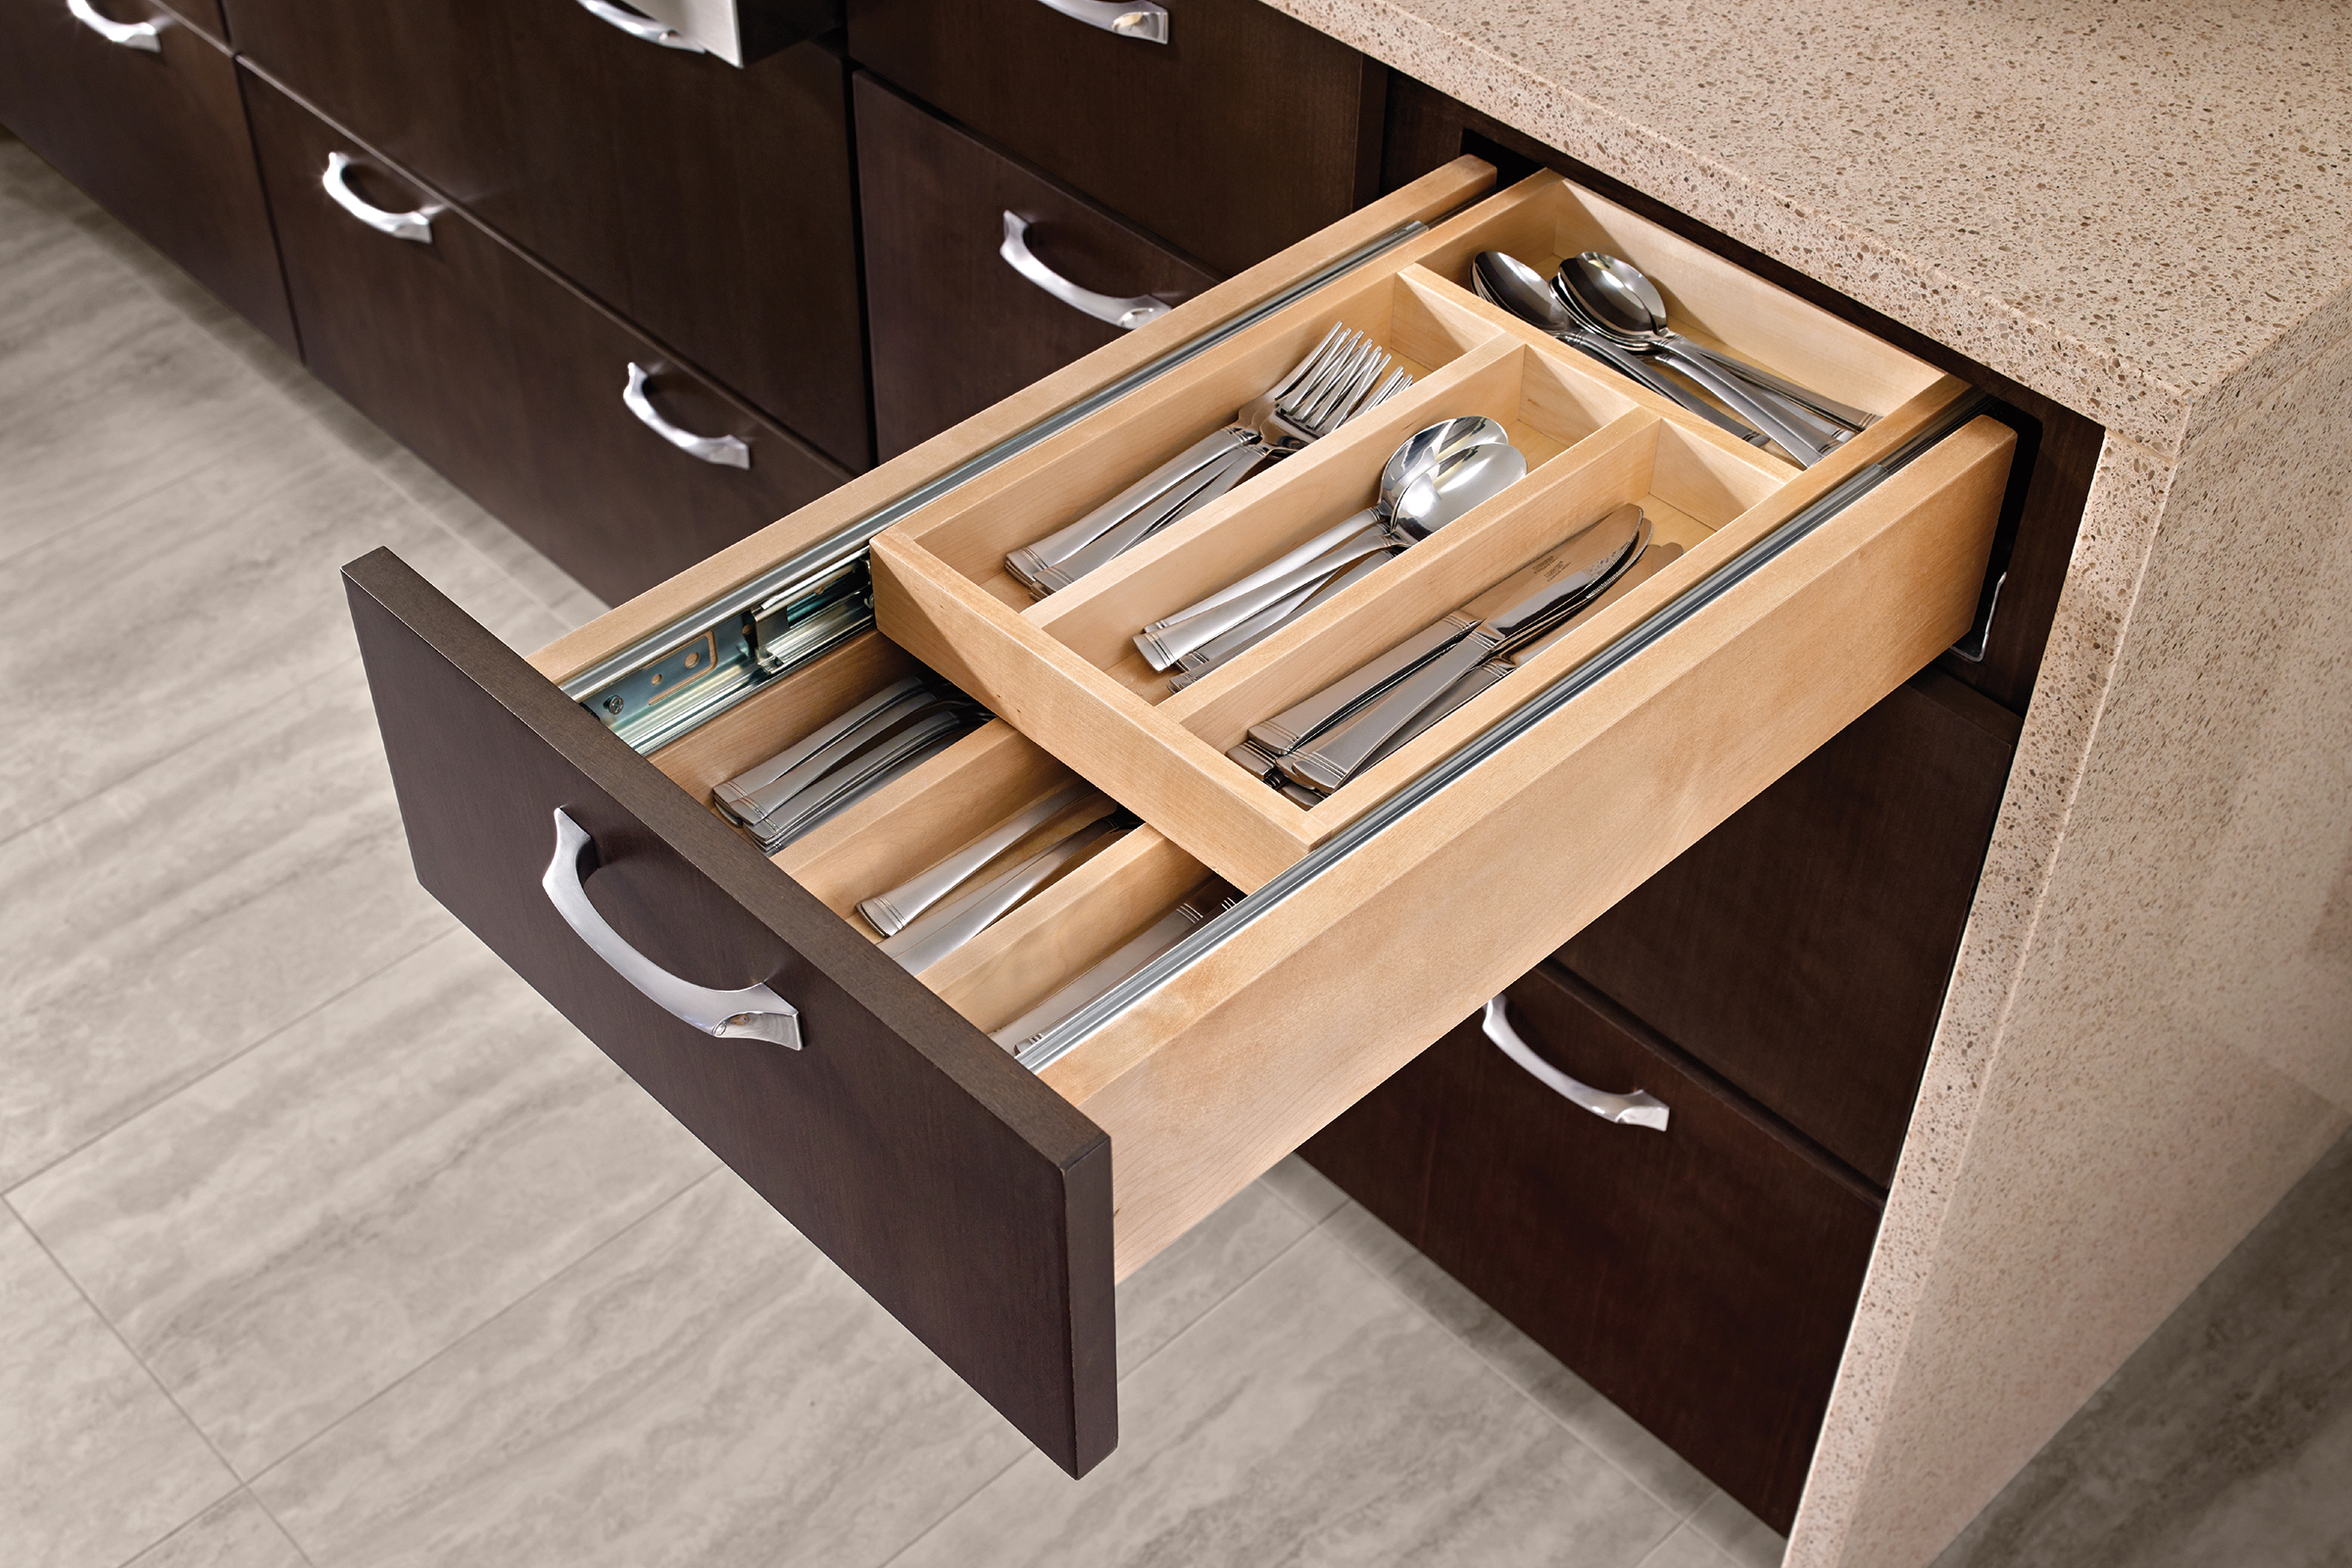 KraftMaid flatware storage two tier kitchen drawer organizer with upper sliding tray for two levels of storage